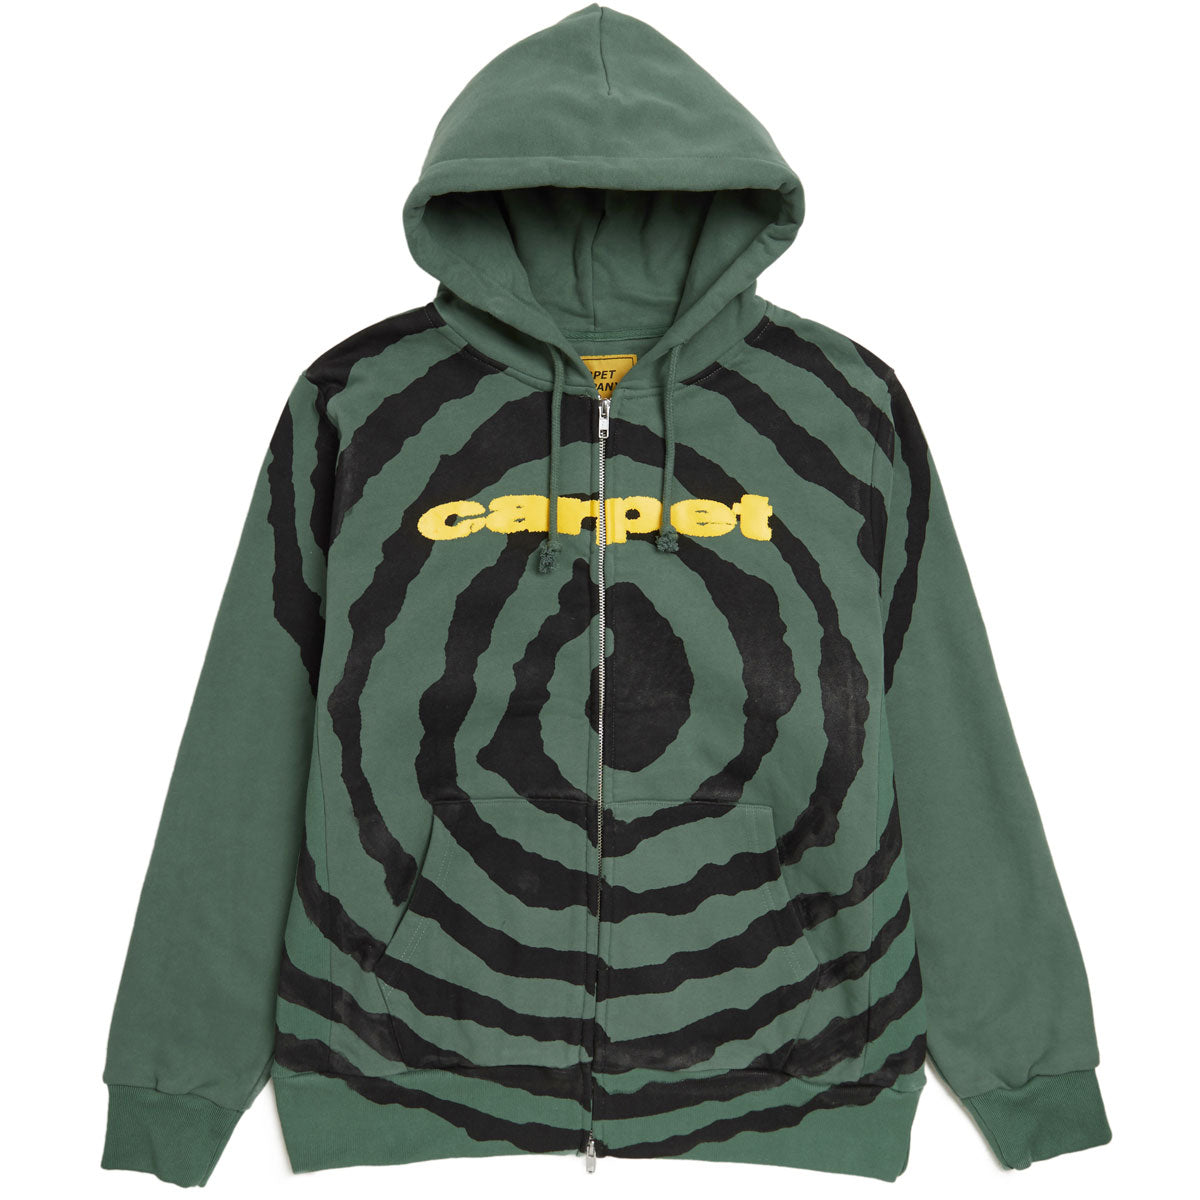 Carpet Company Spiral Zip-Up Hoodie - Green image 1